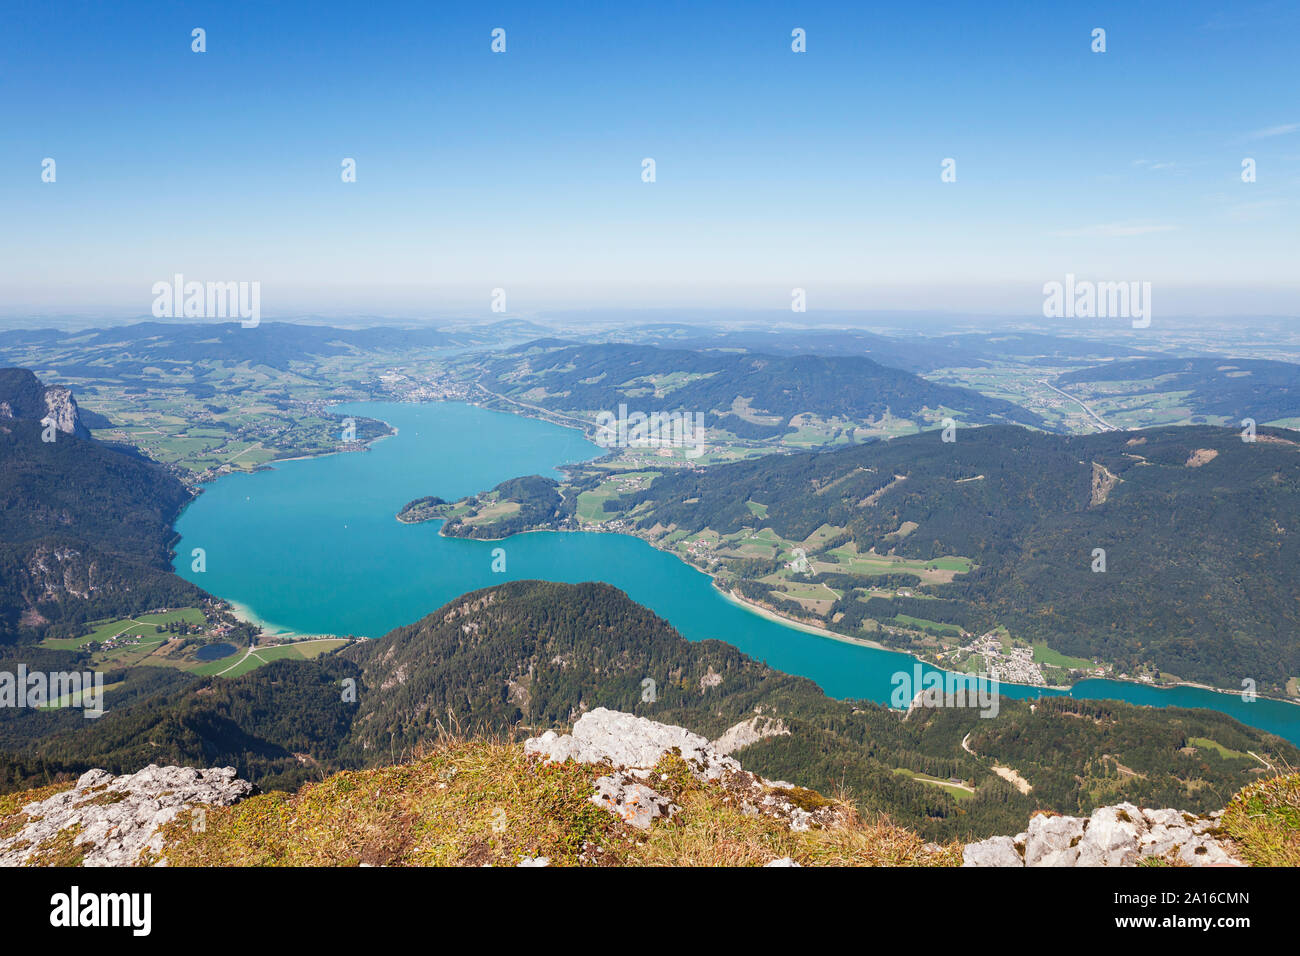 Idyllic shot of lake and mountains against blue sky Stock Photo